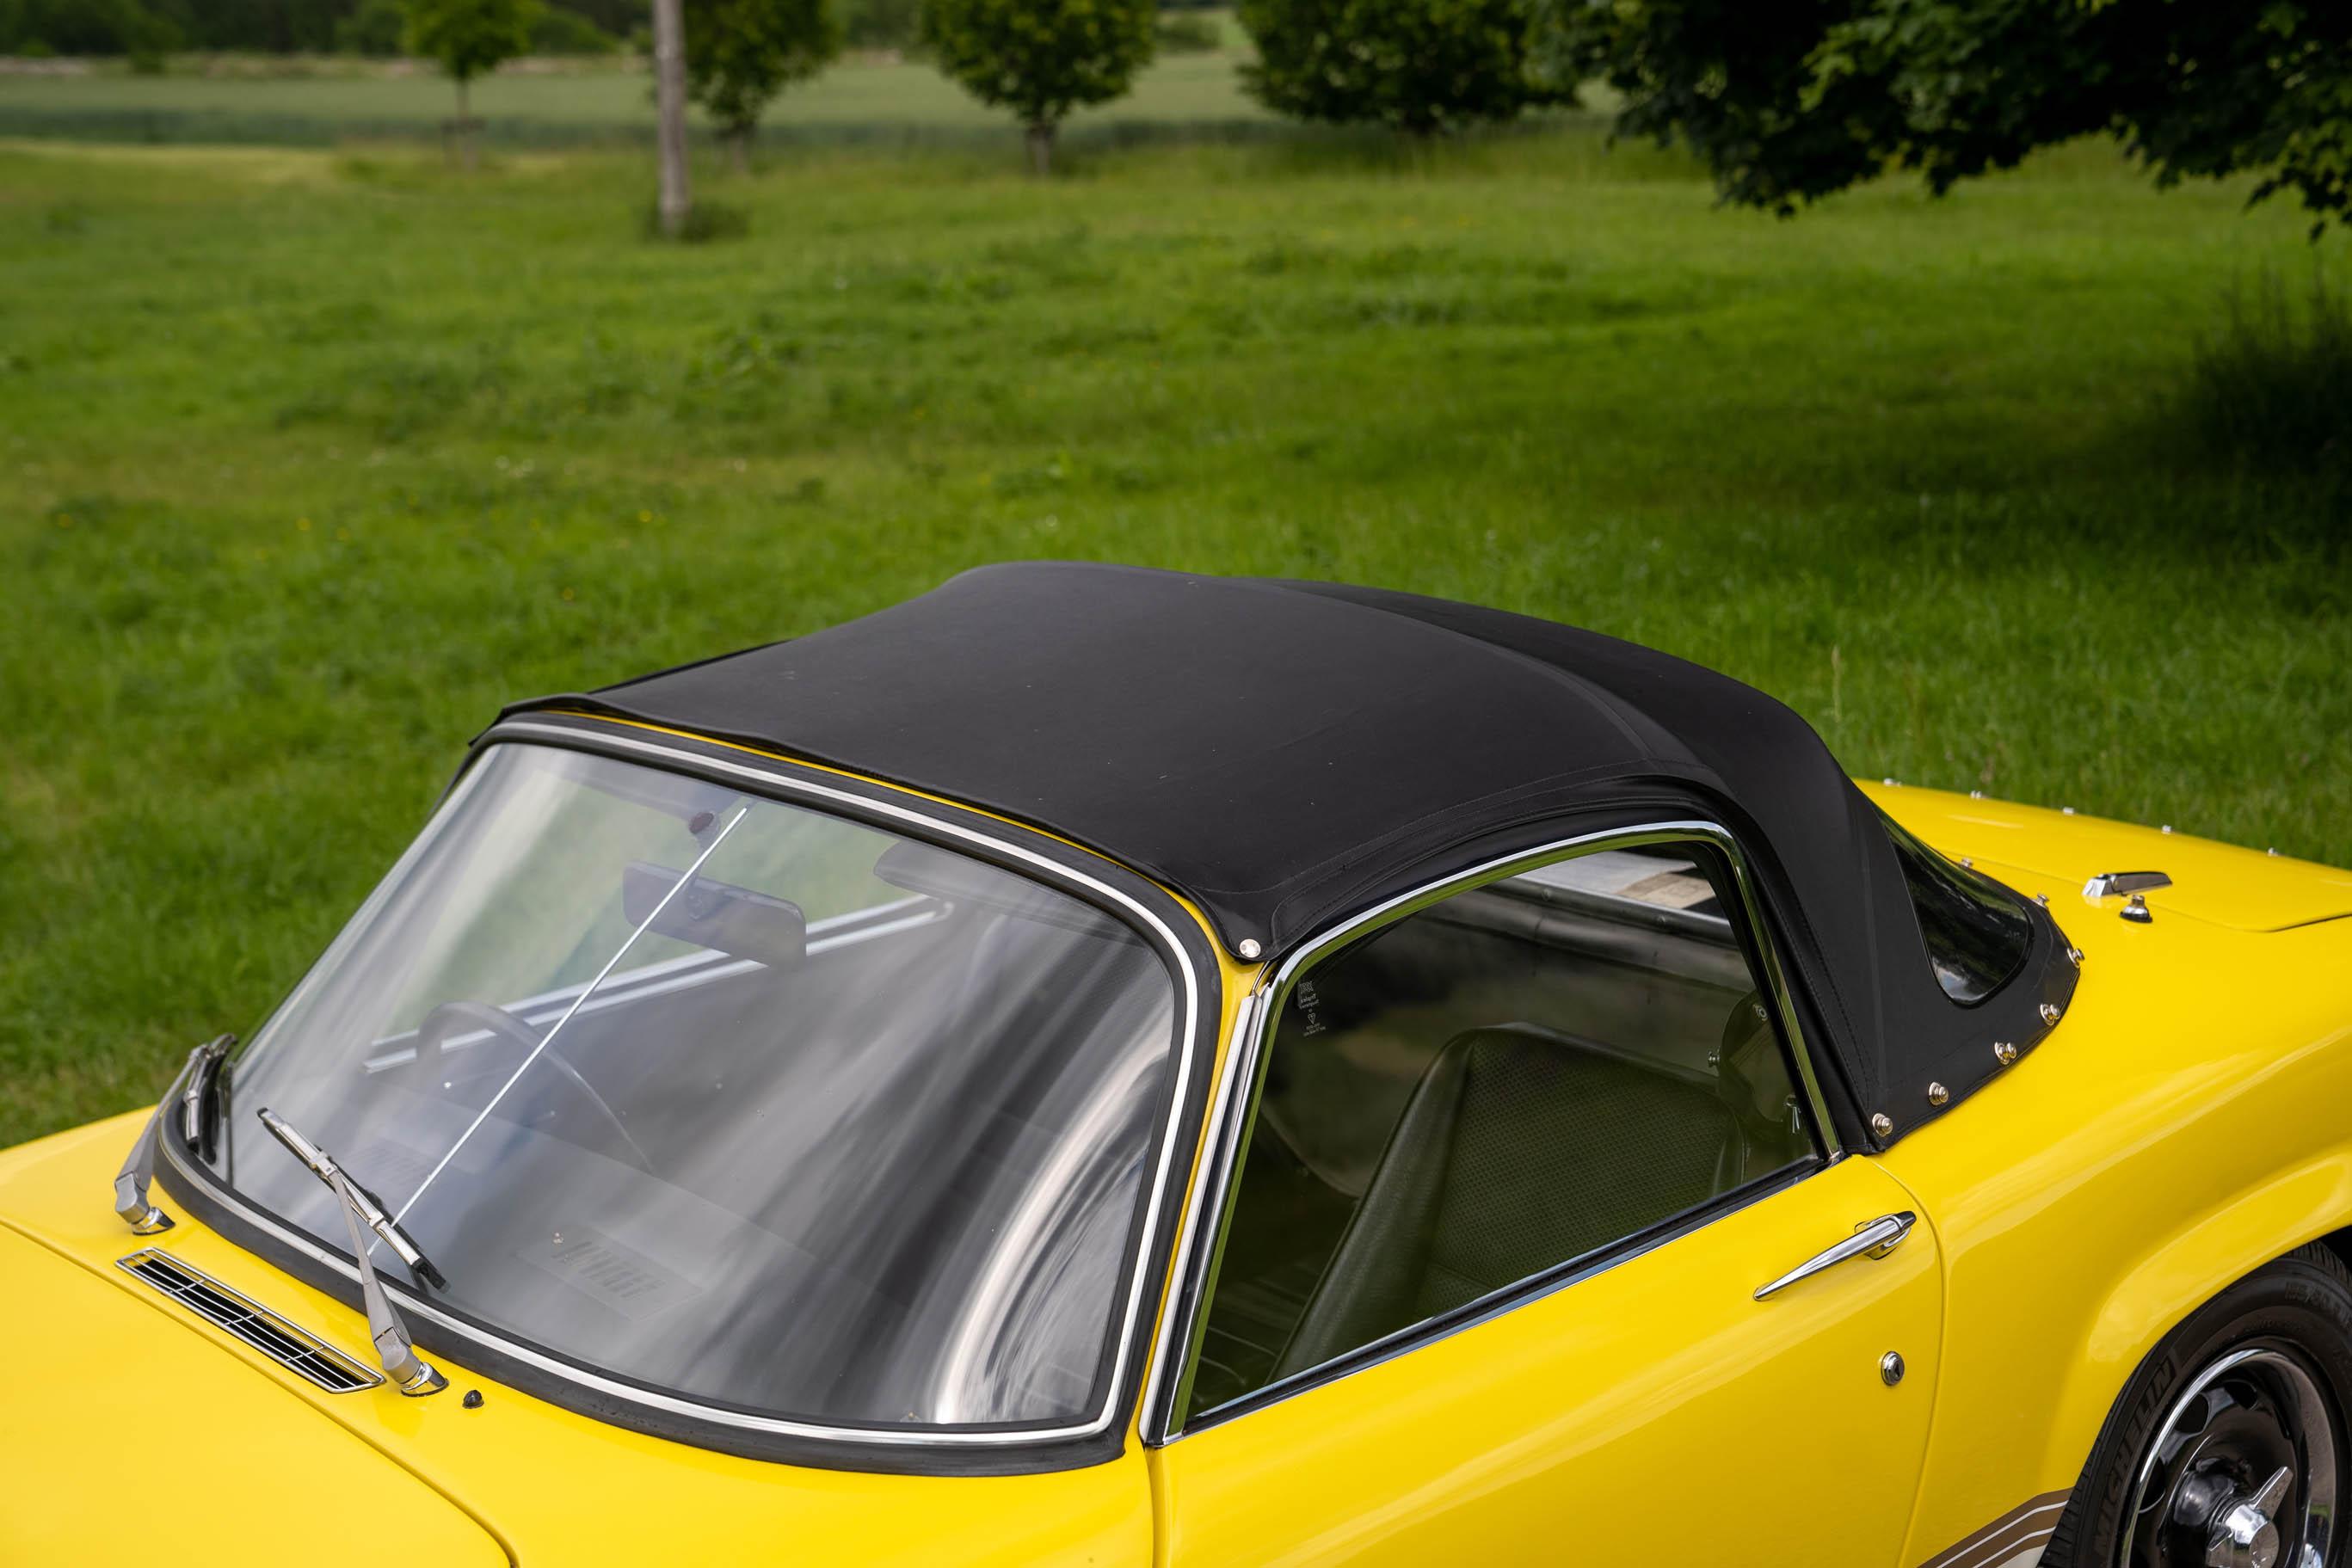 Lotus Sprint Drop Head Coupe 1972